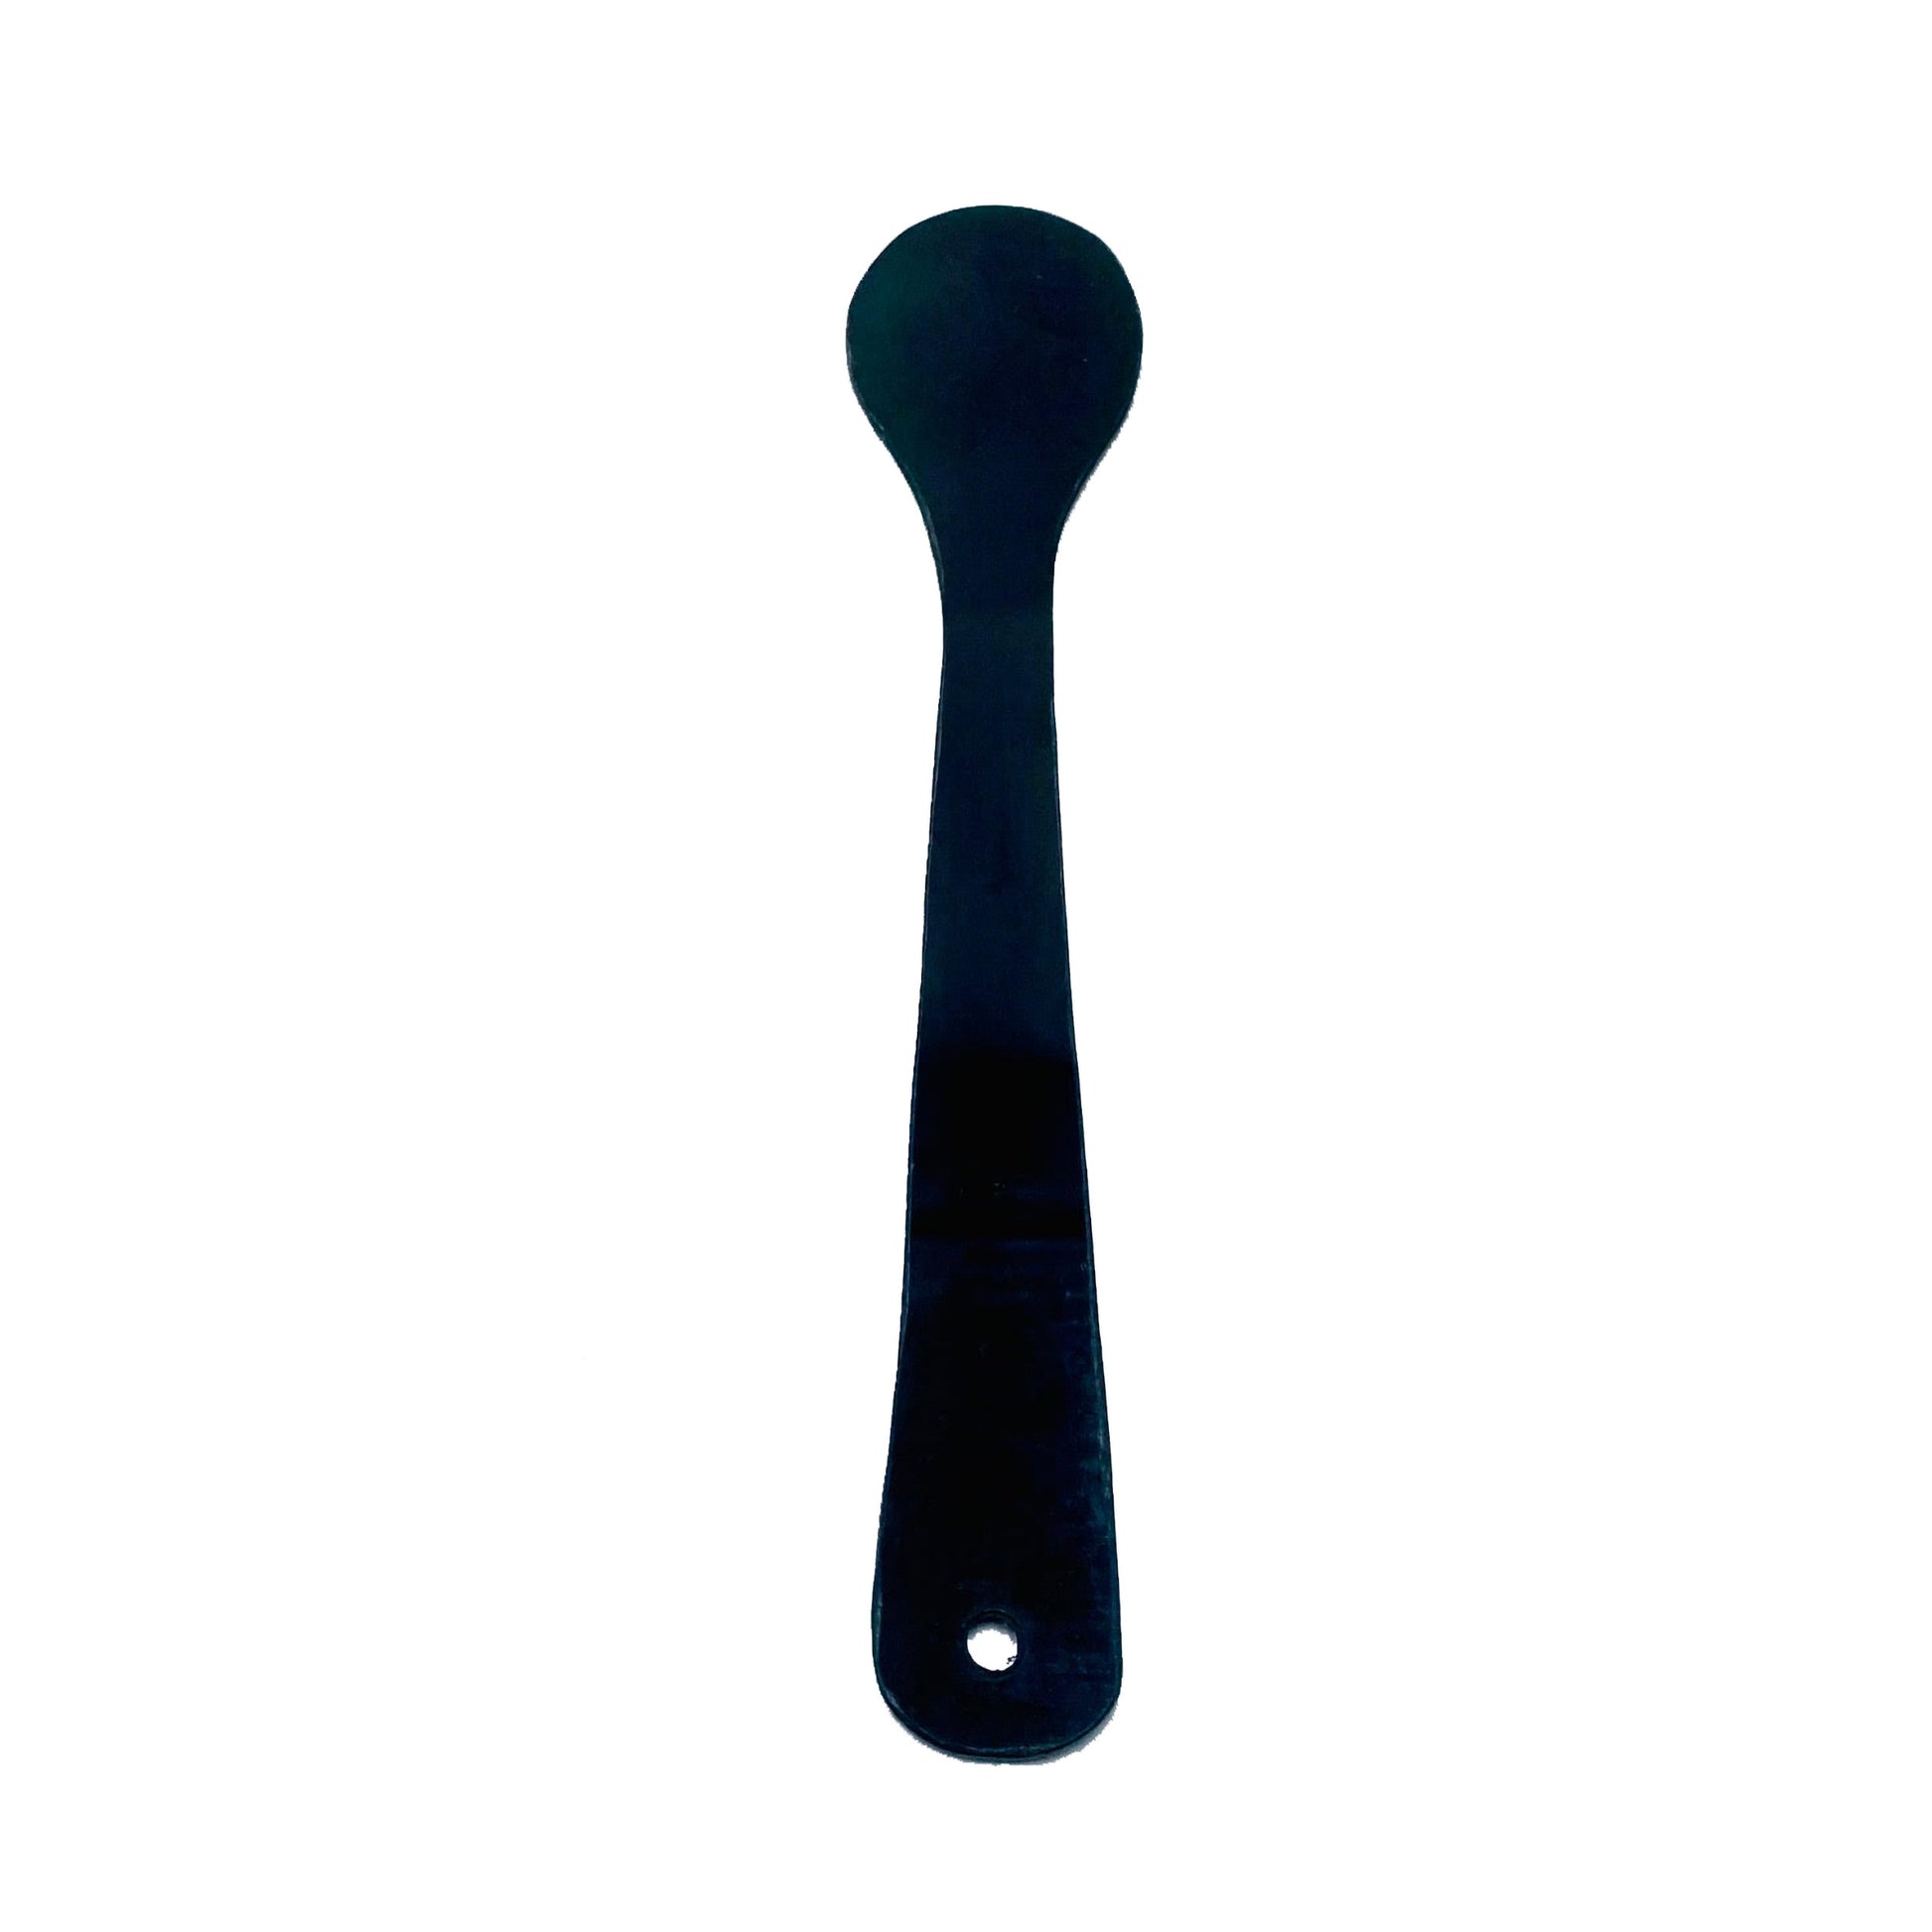 SADIST SPOON Lexan Hairbrush Spanking Paddle, Lexan paddle, Lexan, polycarbonate, bdsm, impact, punishment, discipline